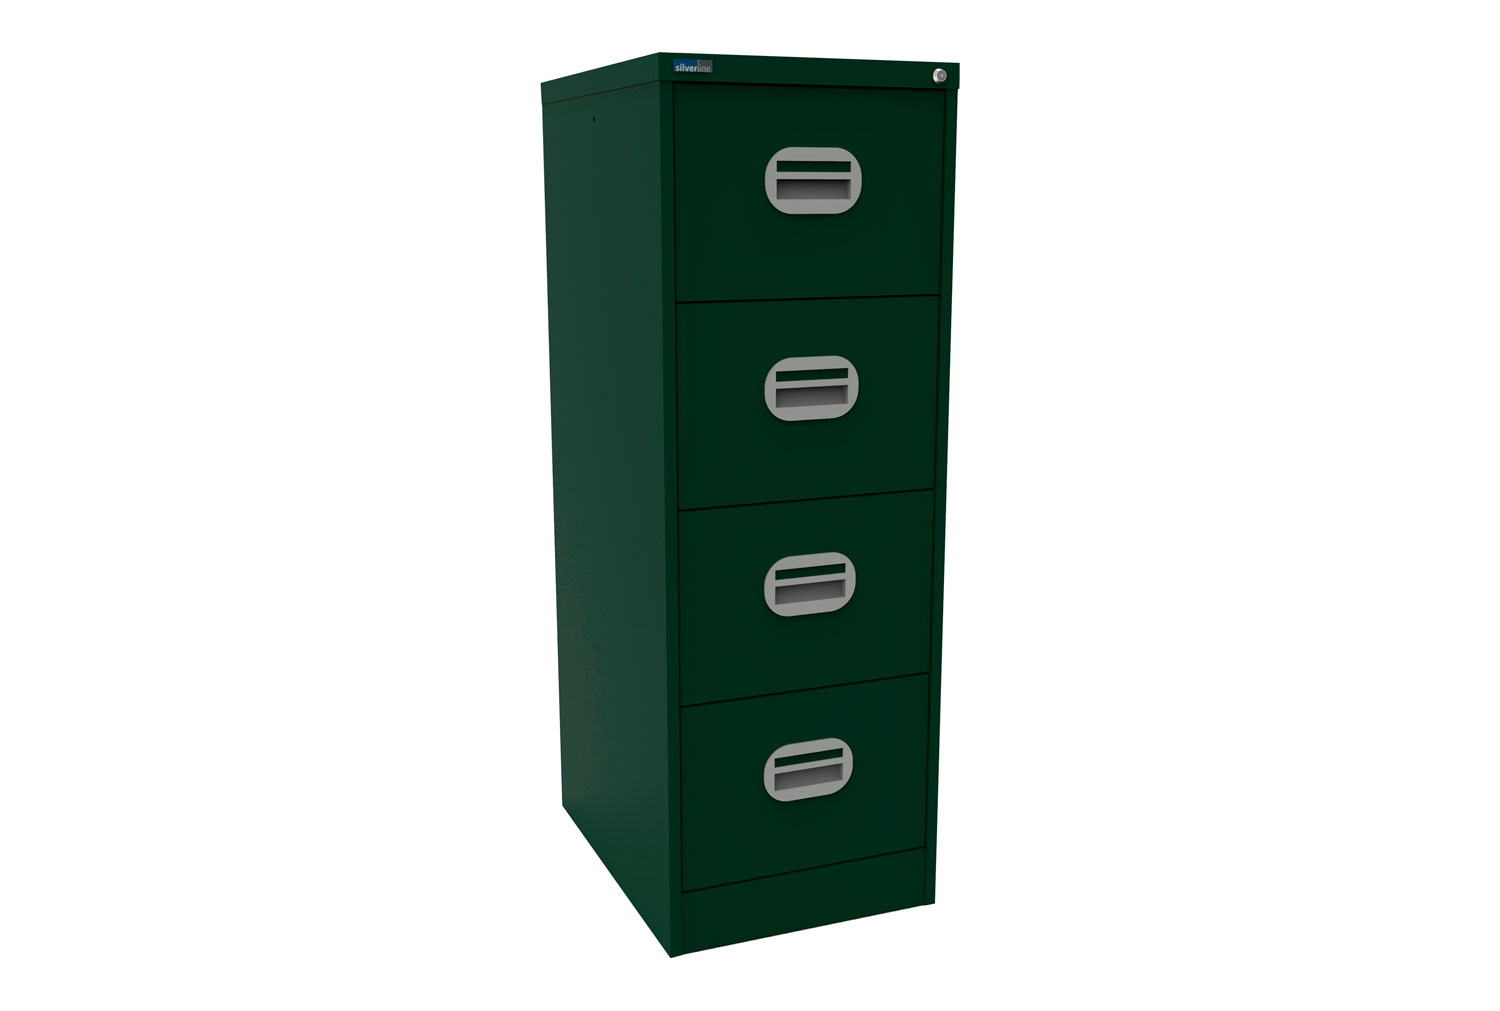 Silverline Kontrax 4 Drawer Filing Cabinet, 4 Drawer - 46wx62dx132h (cm), Green, Fully Installed